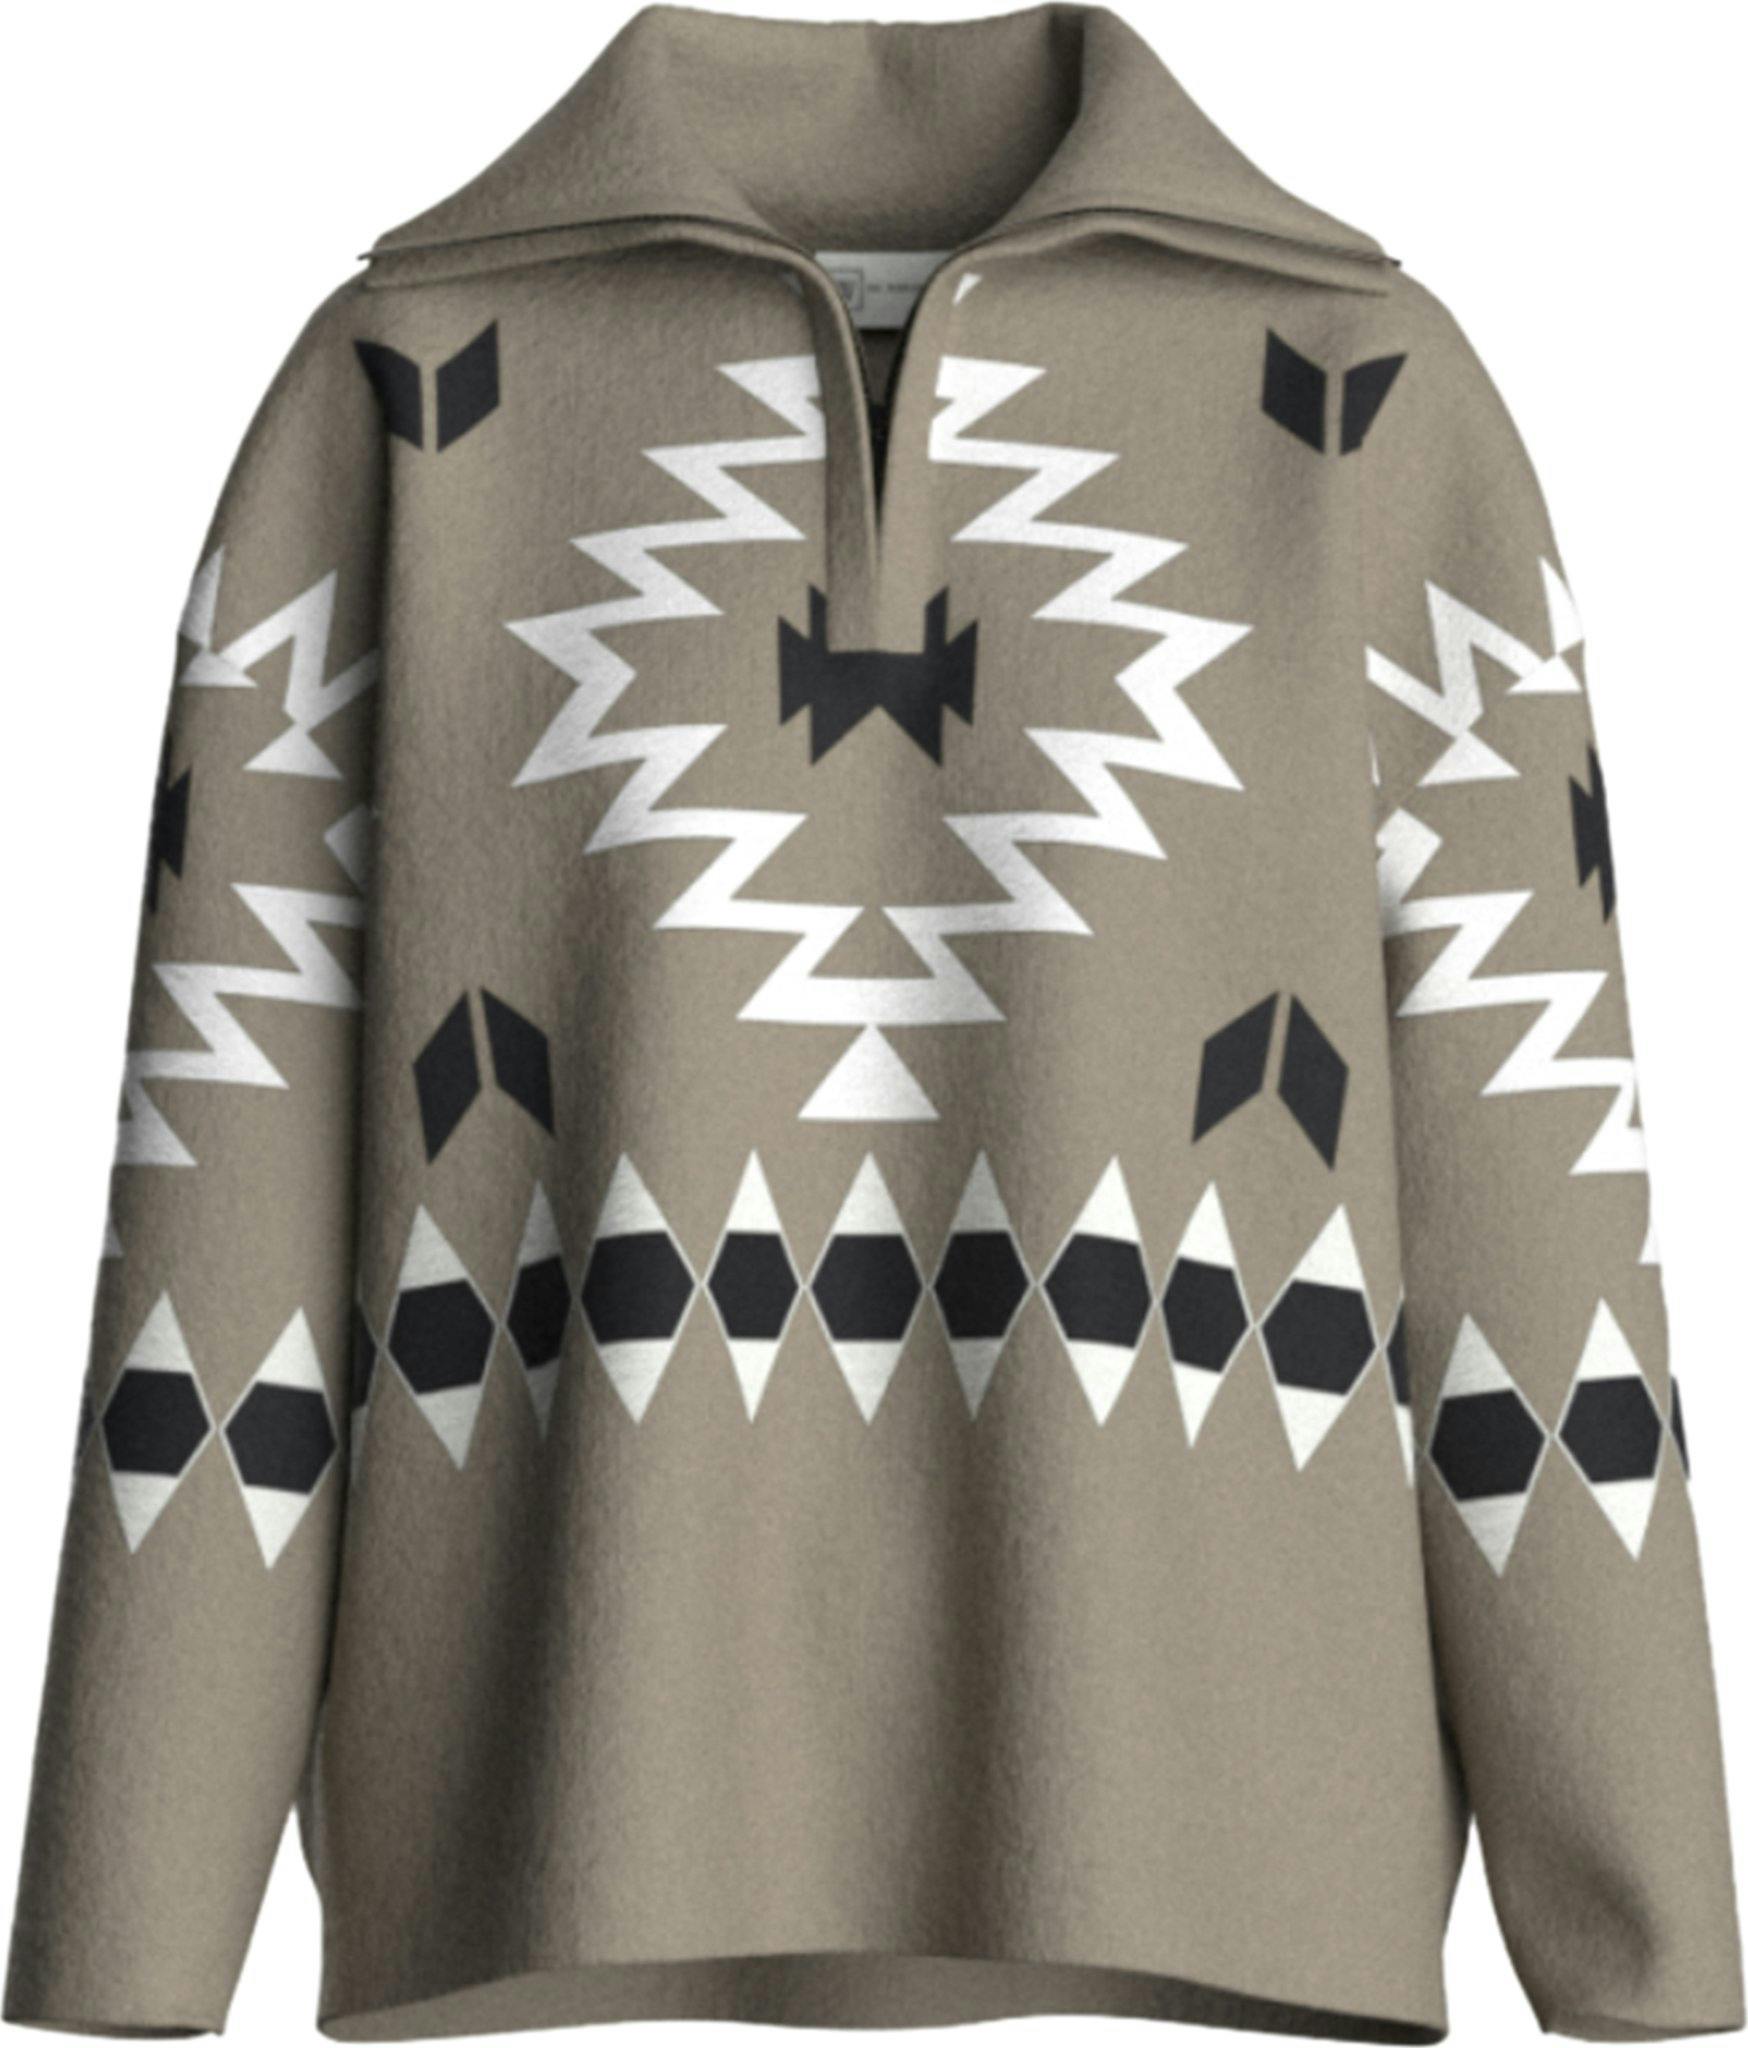 Product image for Haldi Zip-Up Sweater - Women's